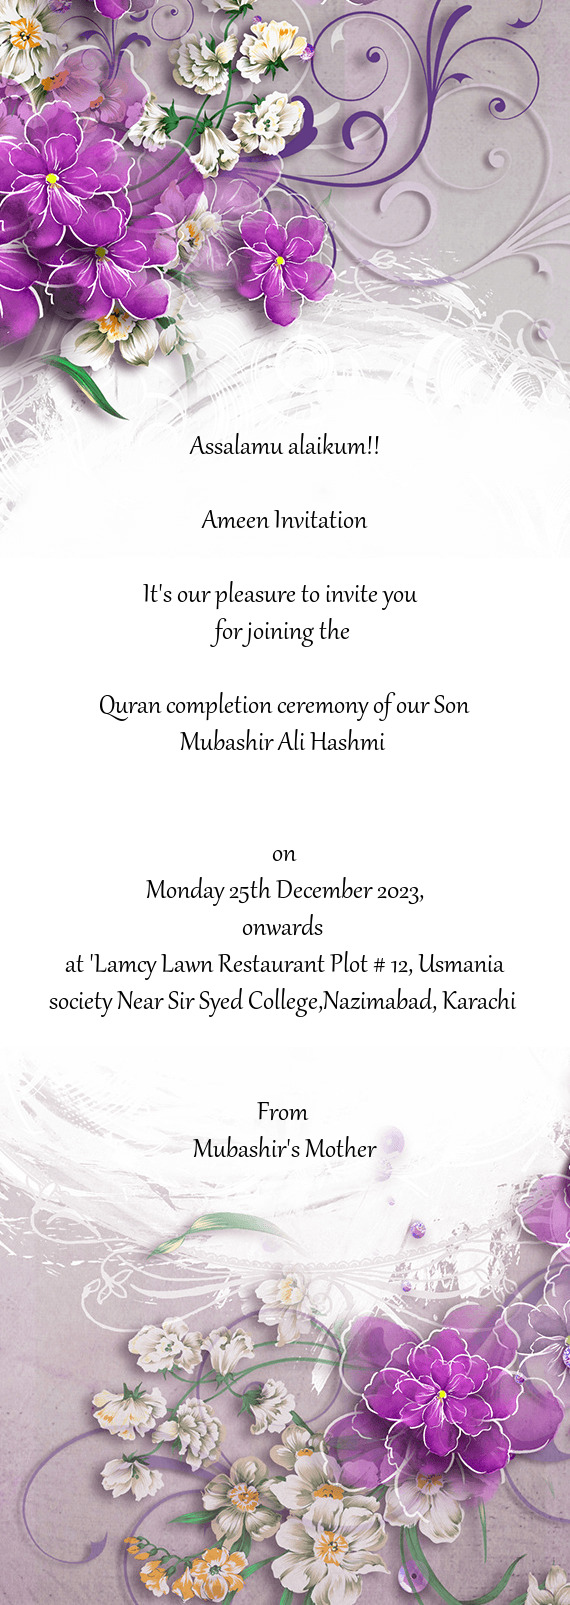 At "Lamcy Lawn Restaurant Plot # 12, Usmania society Near Sir Syed College,Nazimabad, Karachi